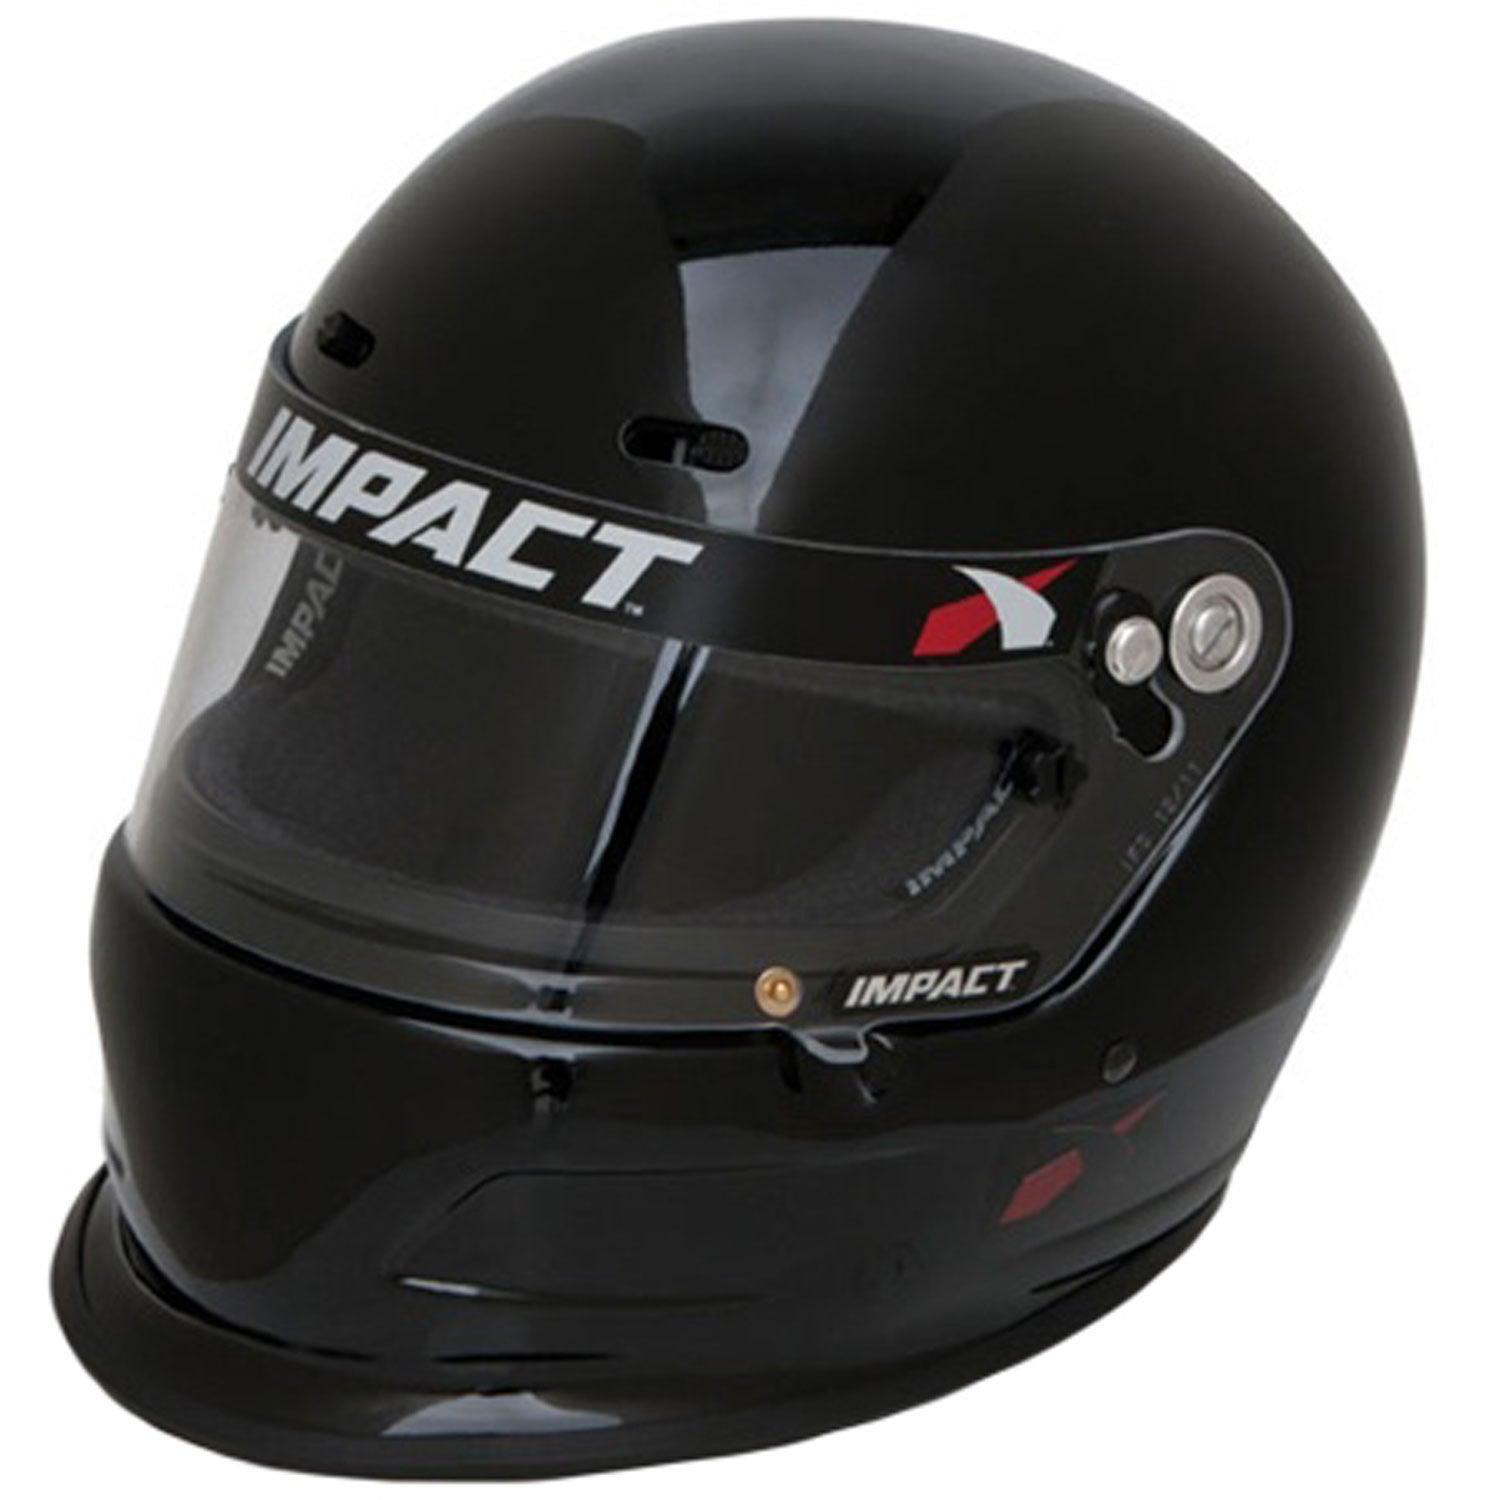 Helmet Charger Large Black SA2020 - Burlile Performance Products